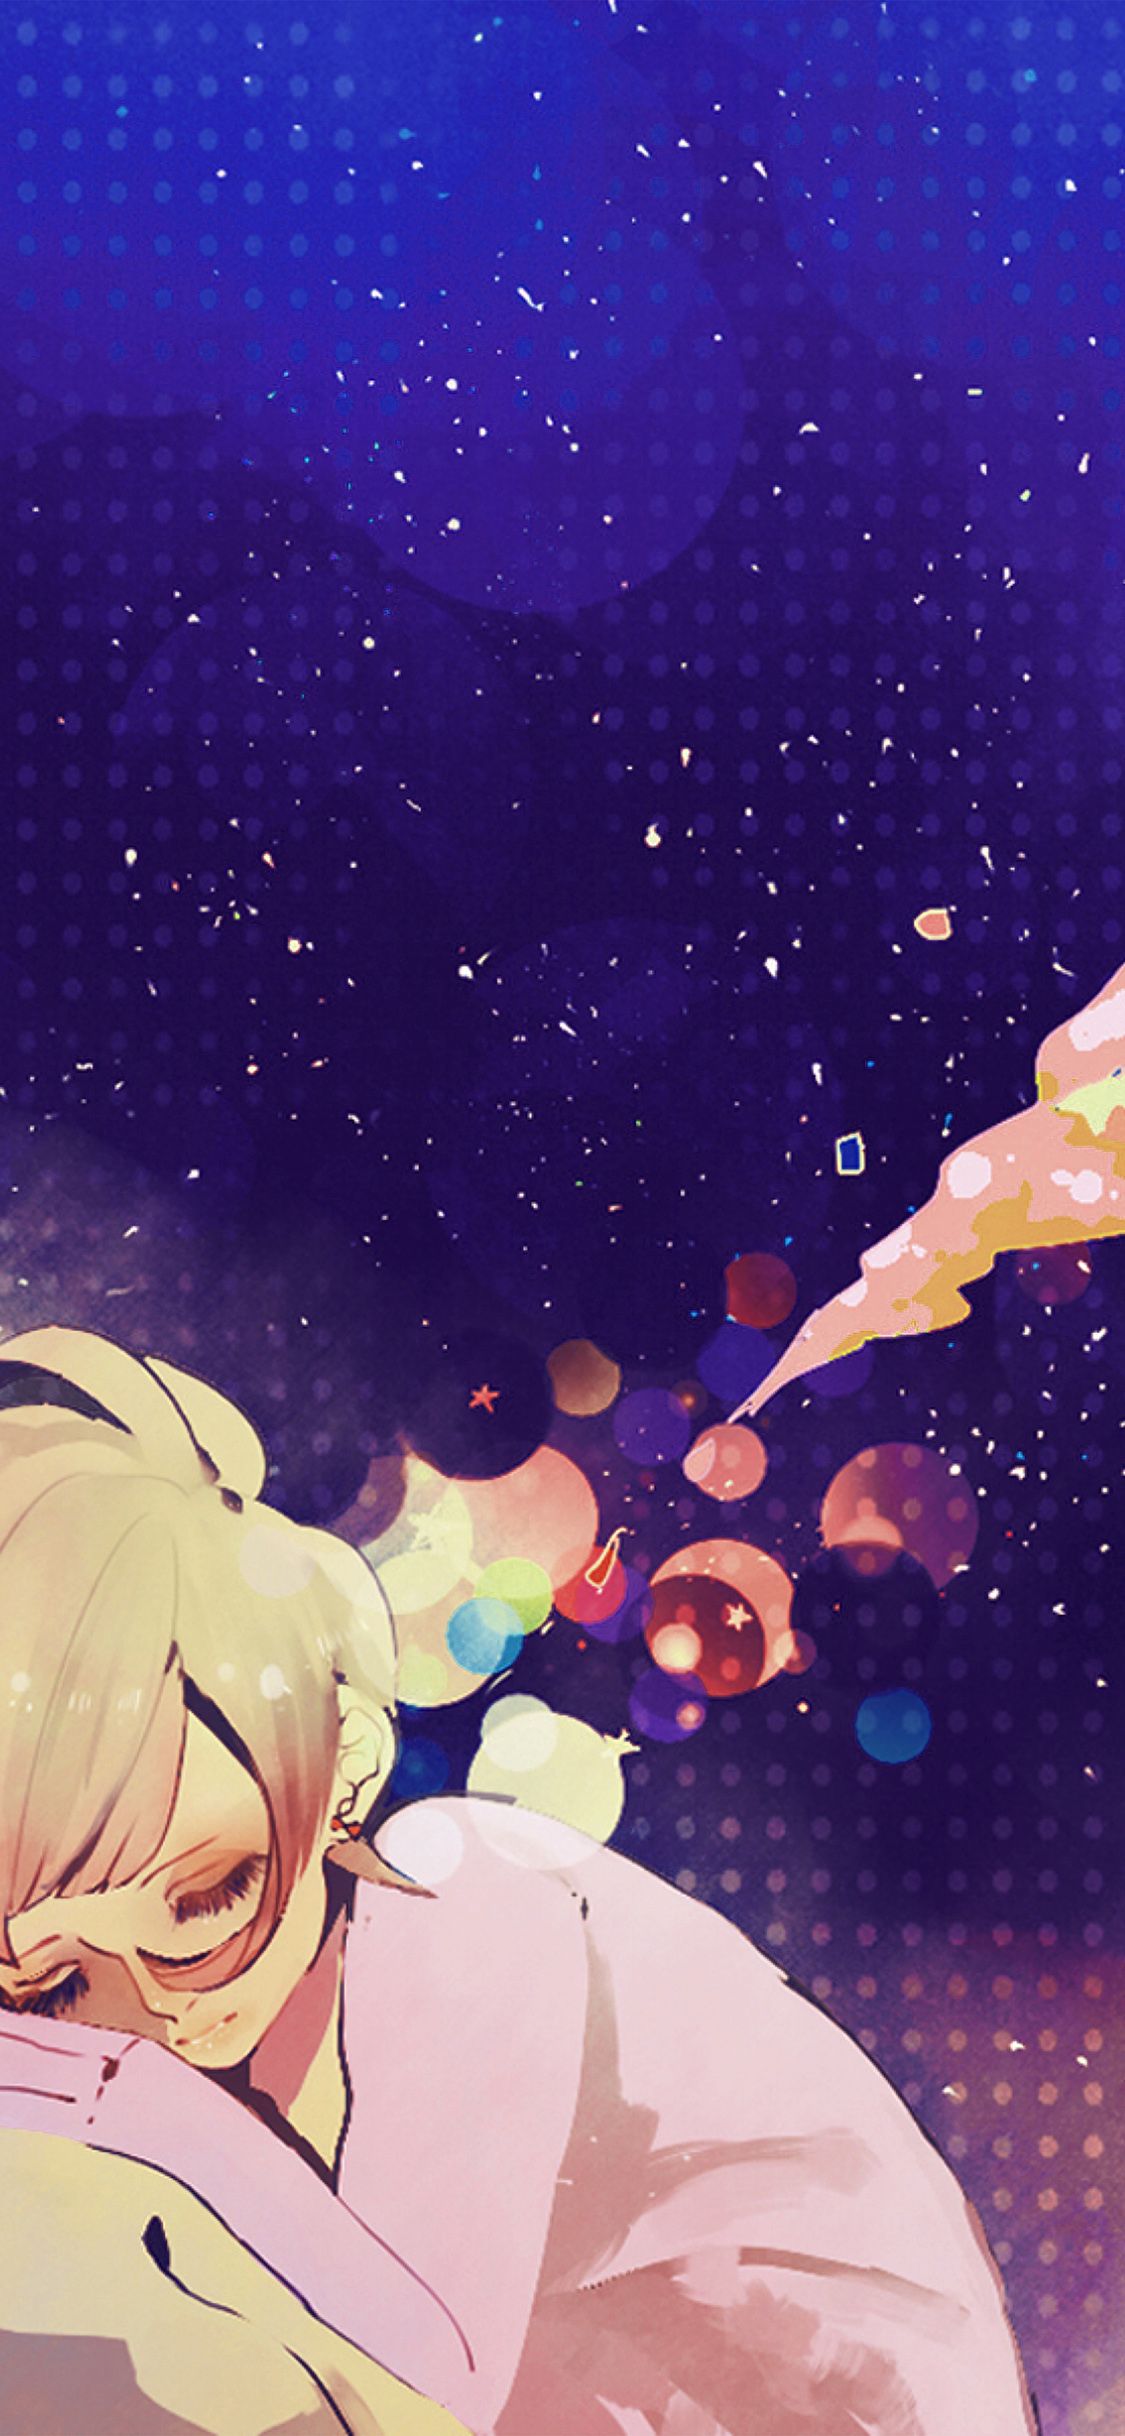 iPhone X wallpaper. sleeping girl anime